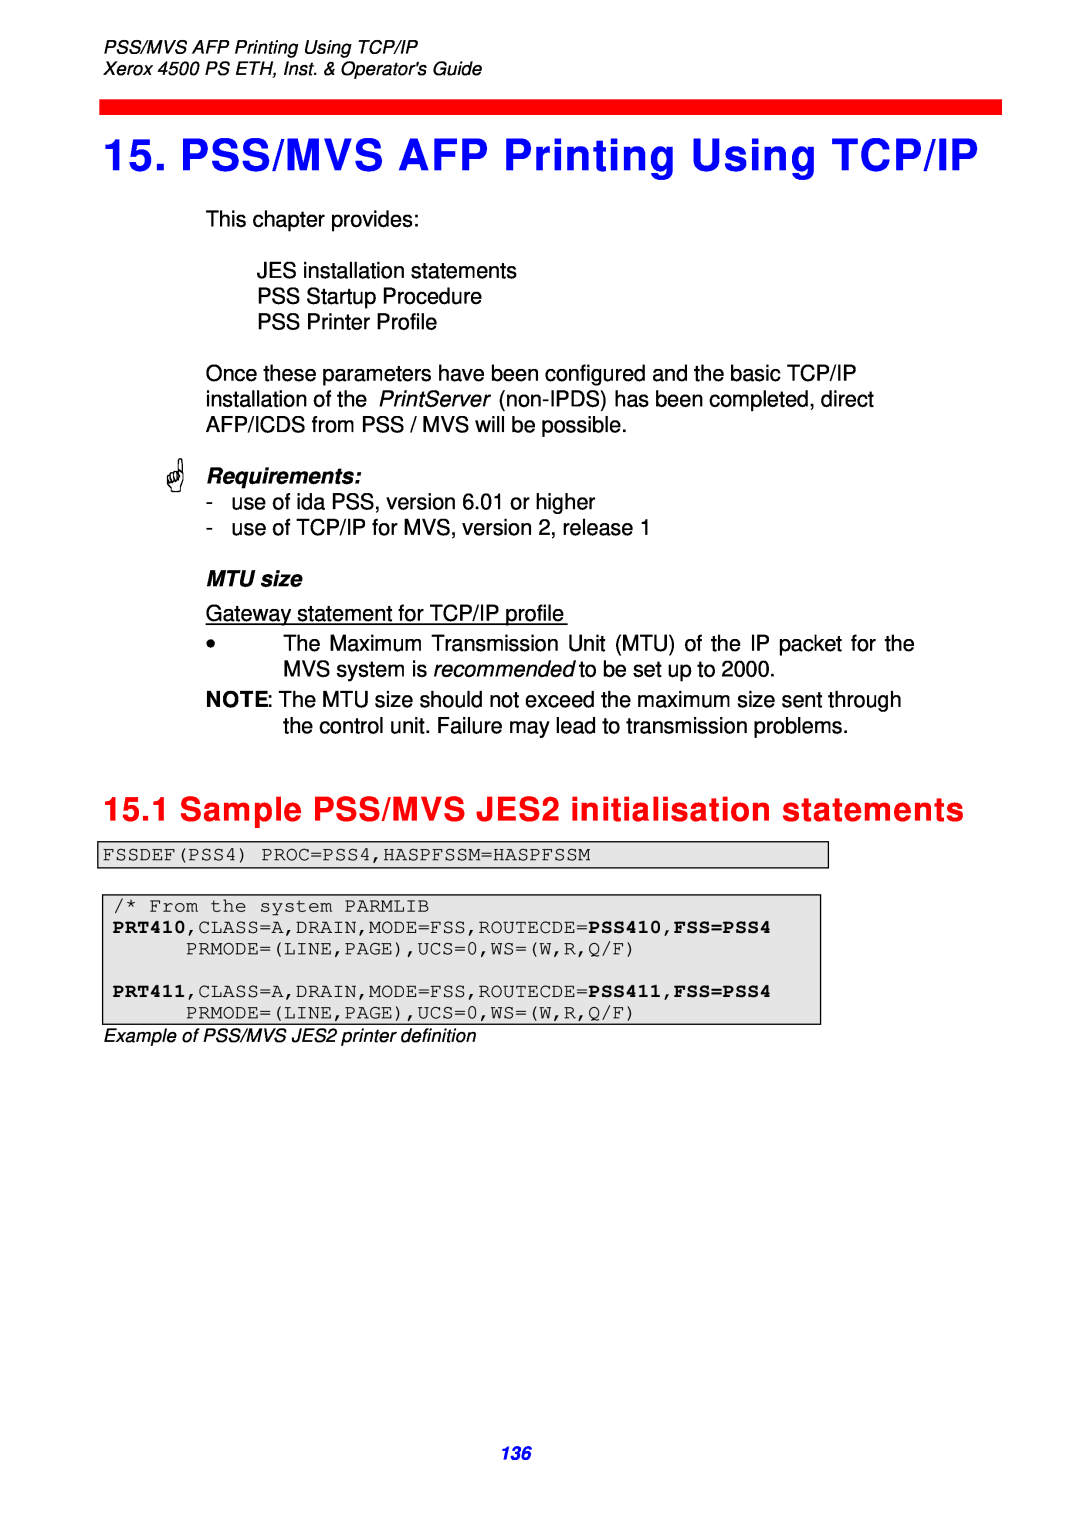 Xerox 4500 ps eth PSS/MVS AFP Printing Using TCP/IP, Sample PSS/MVS JES2 initialisation statements, Requirements, MTU size 